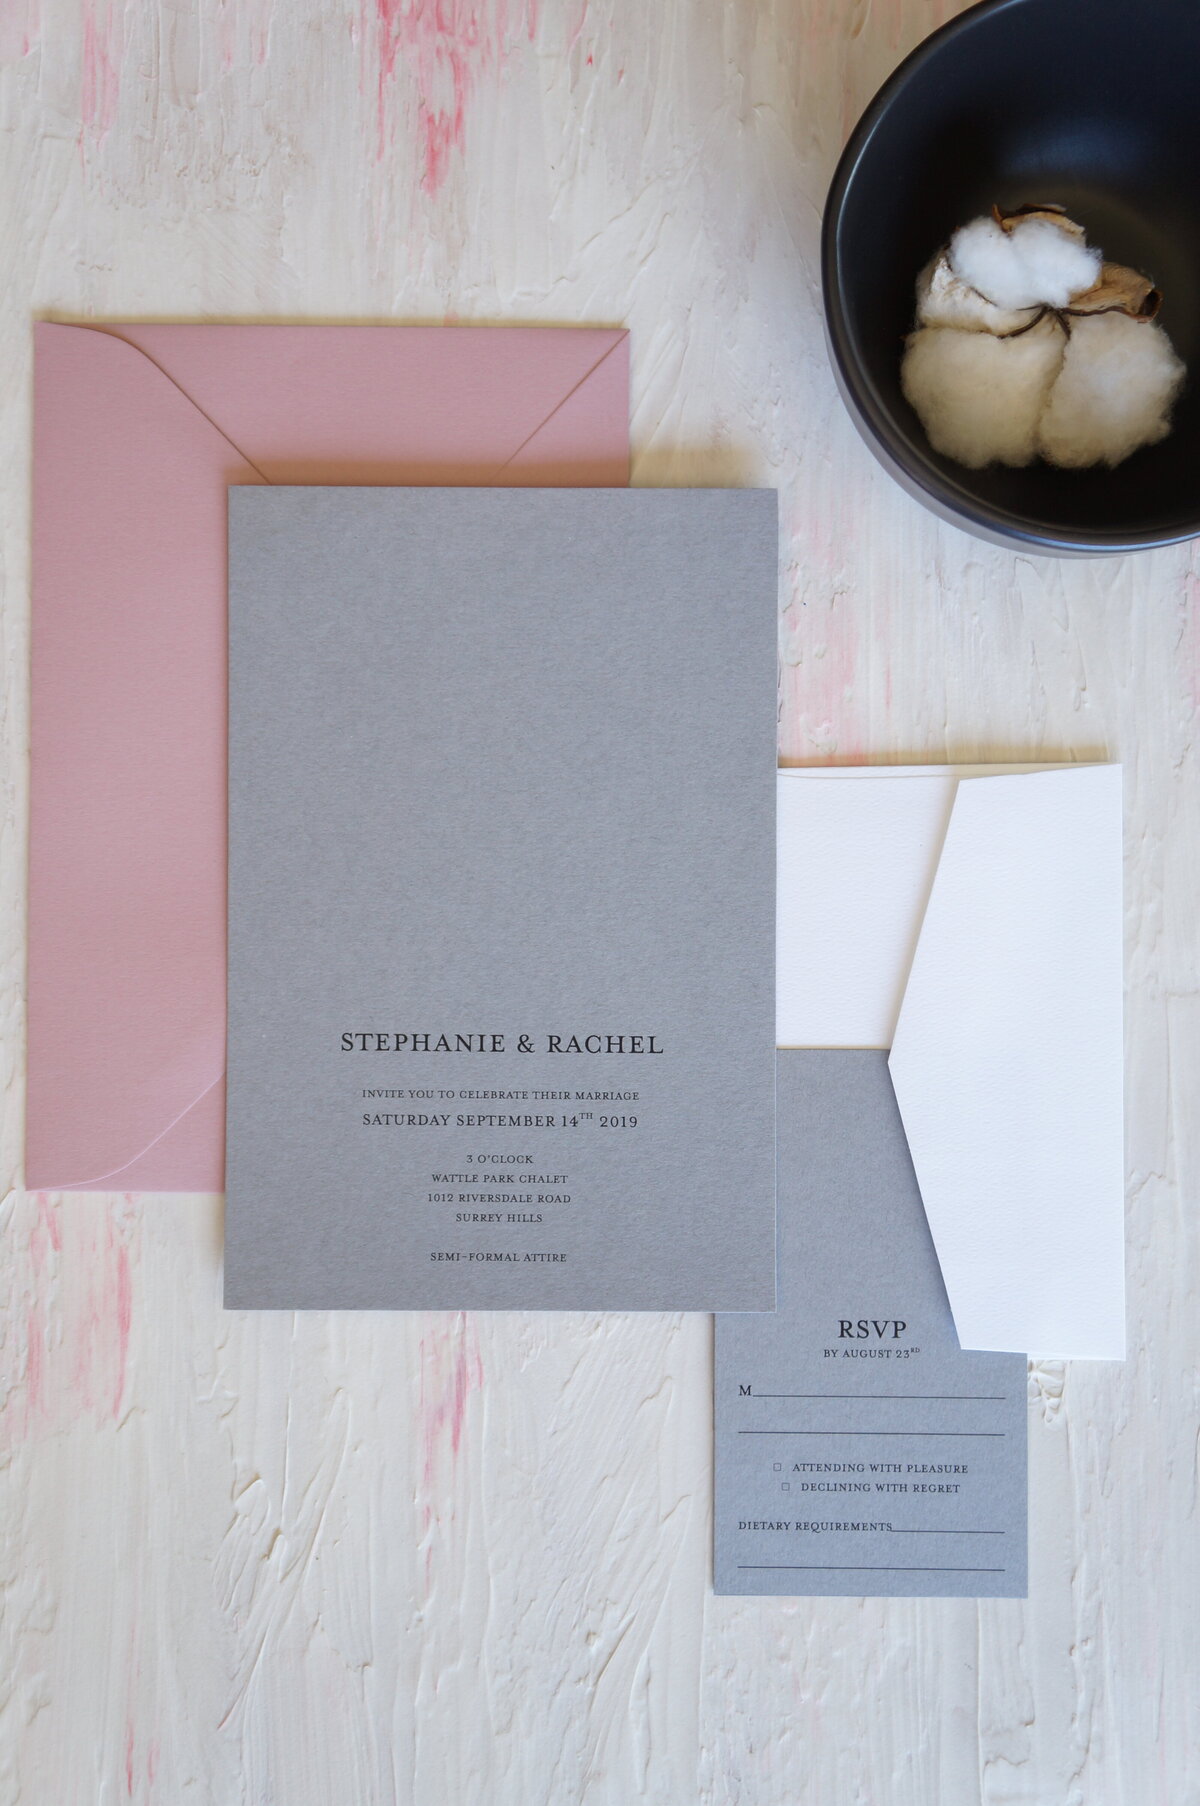 Grey and white minimalist wedding invitation with pink envelope